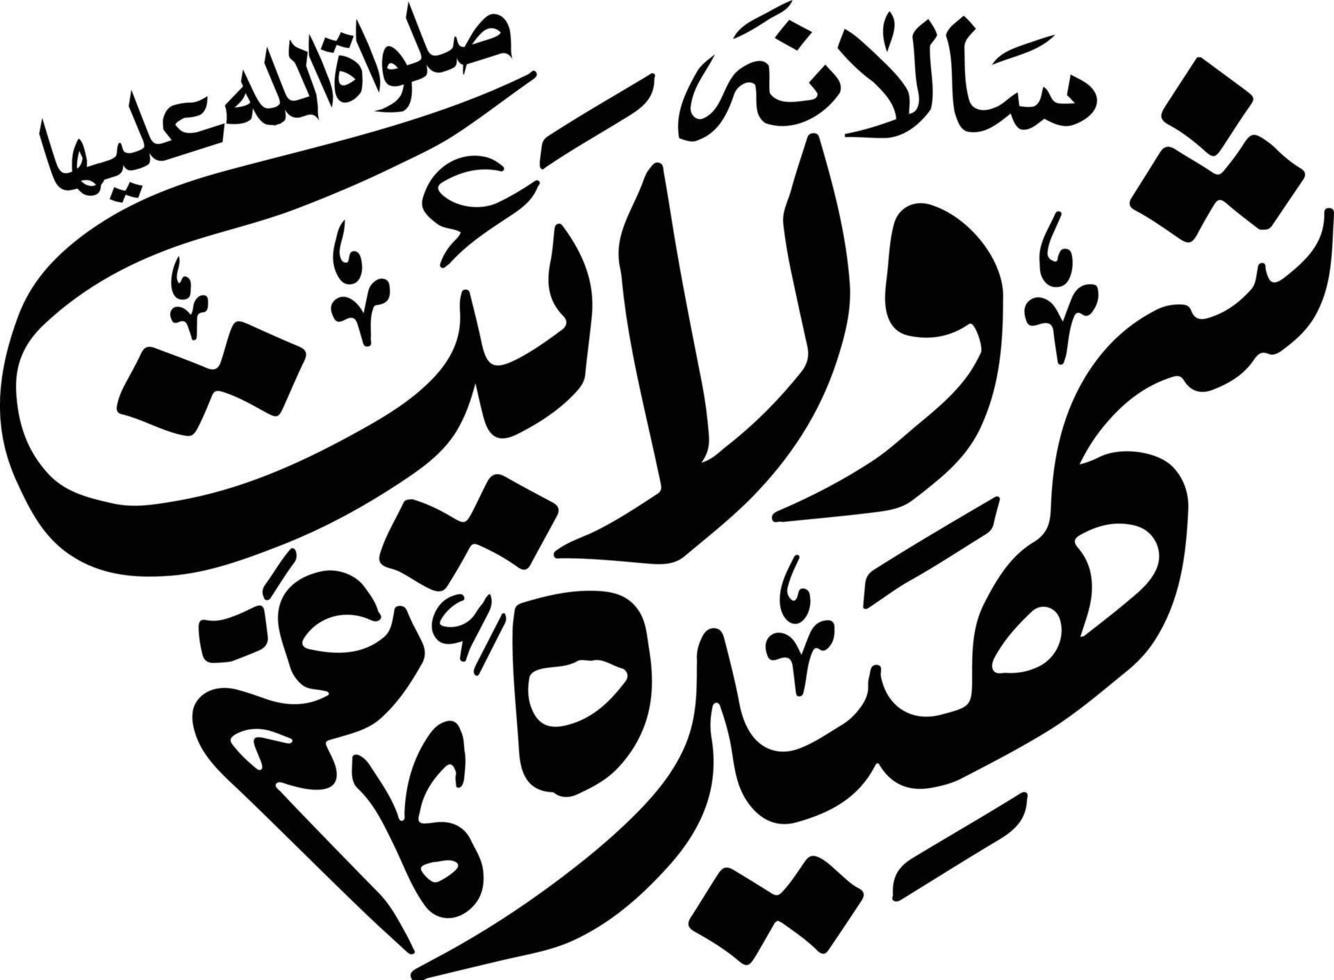 shaeeda welayat ka azm título islâmica urdu caligrafia árabe vetor livre